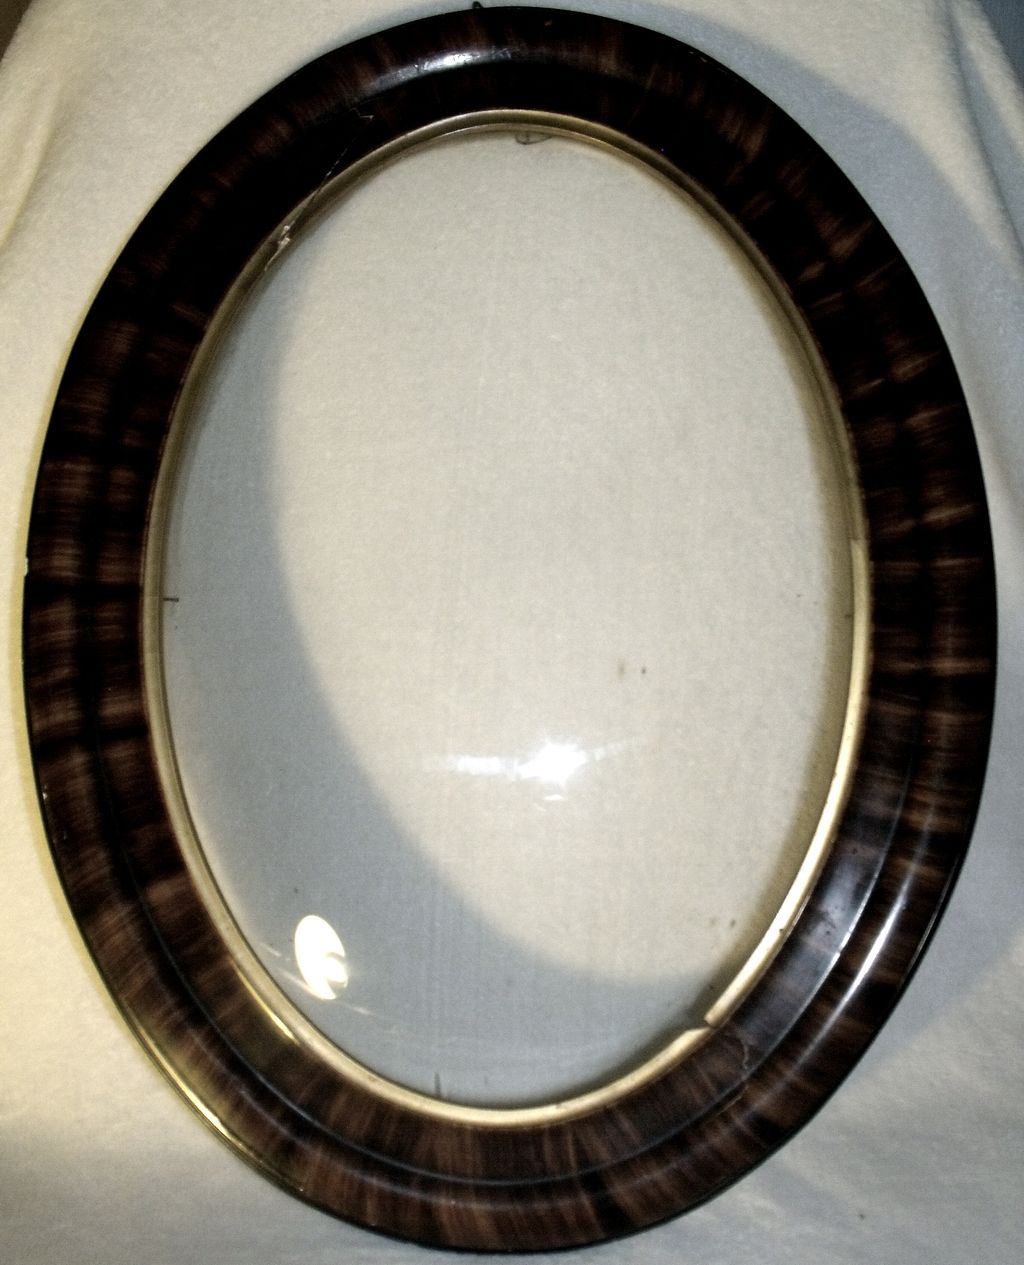 oval wooden frame